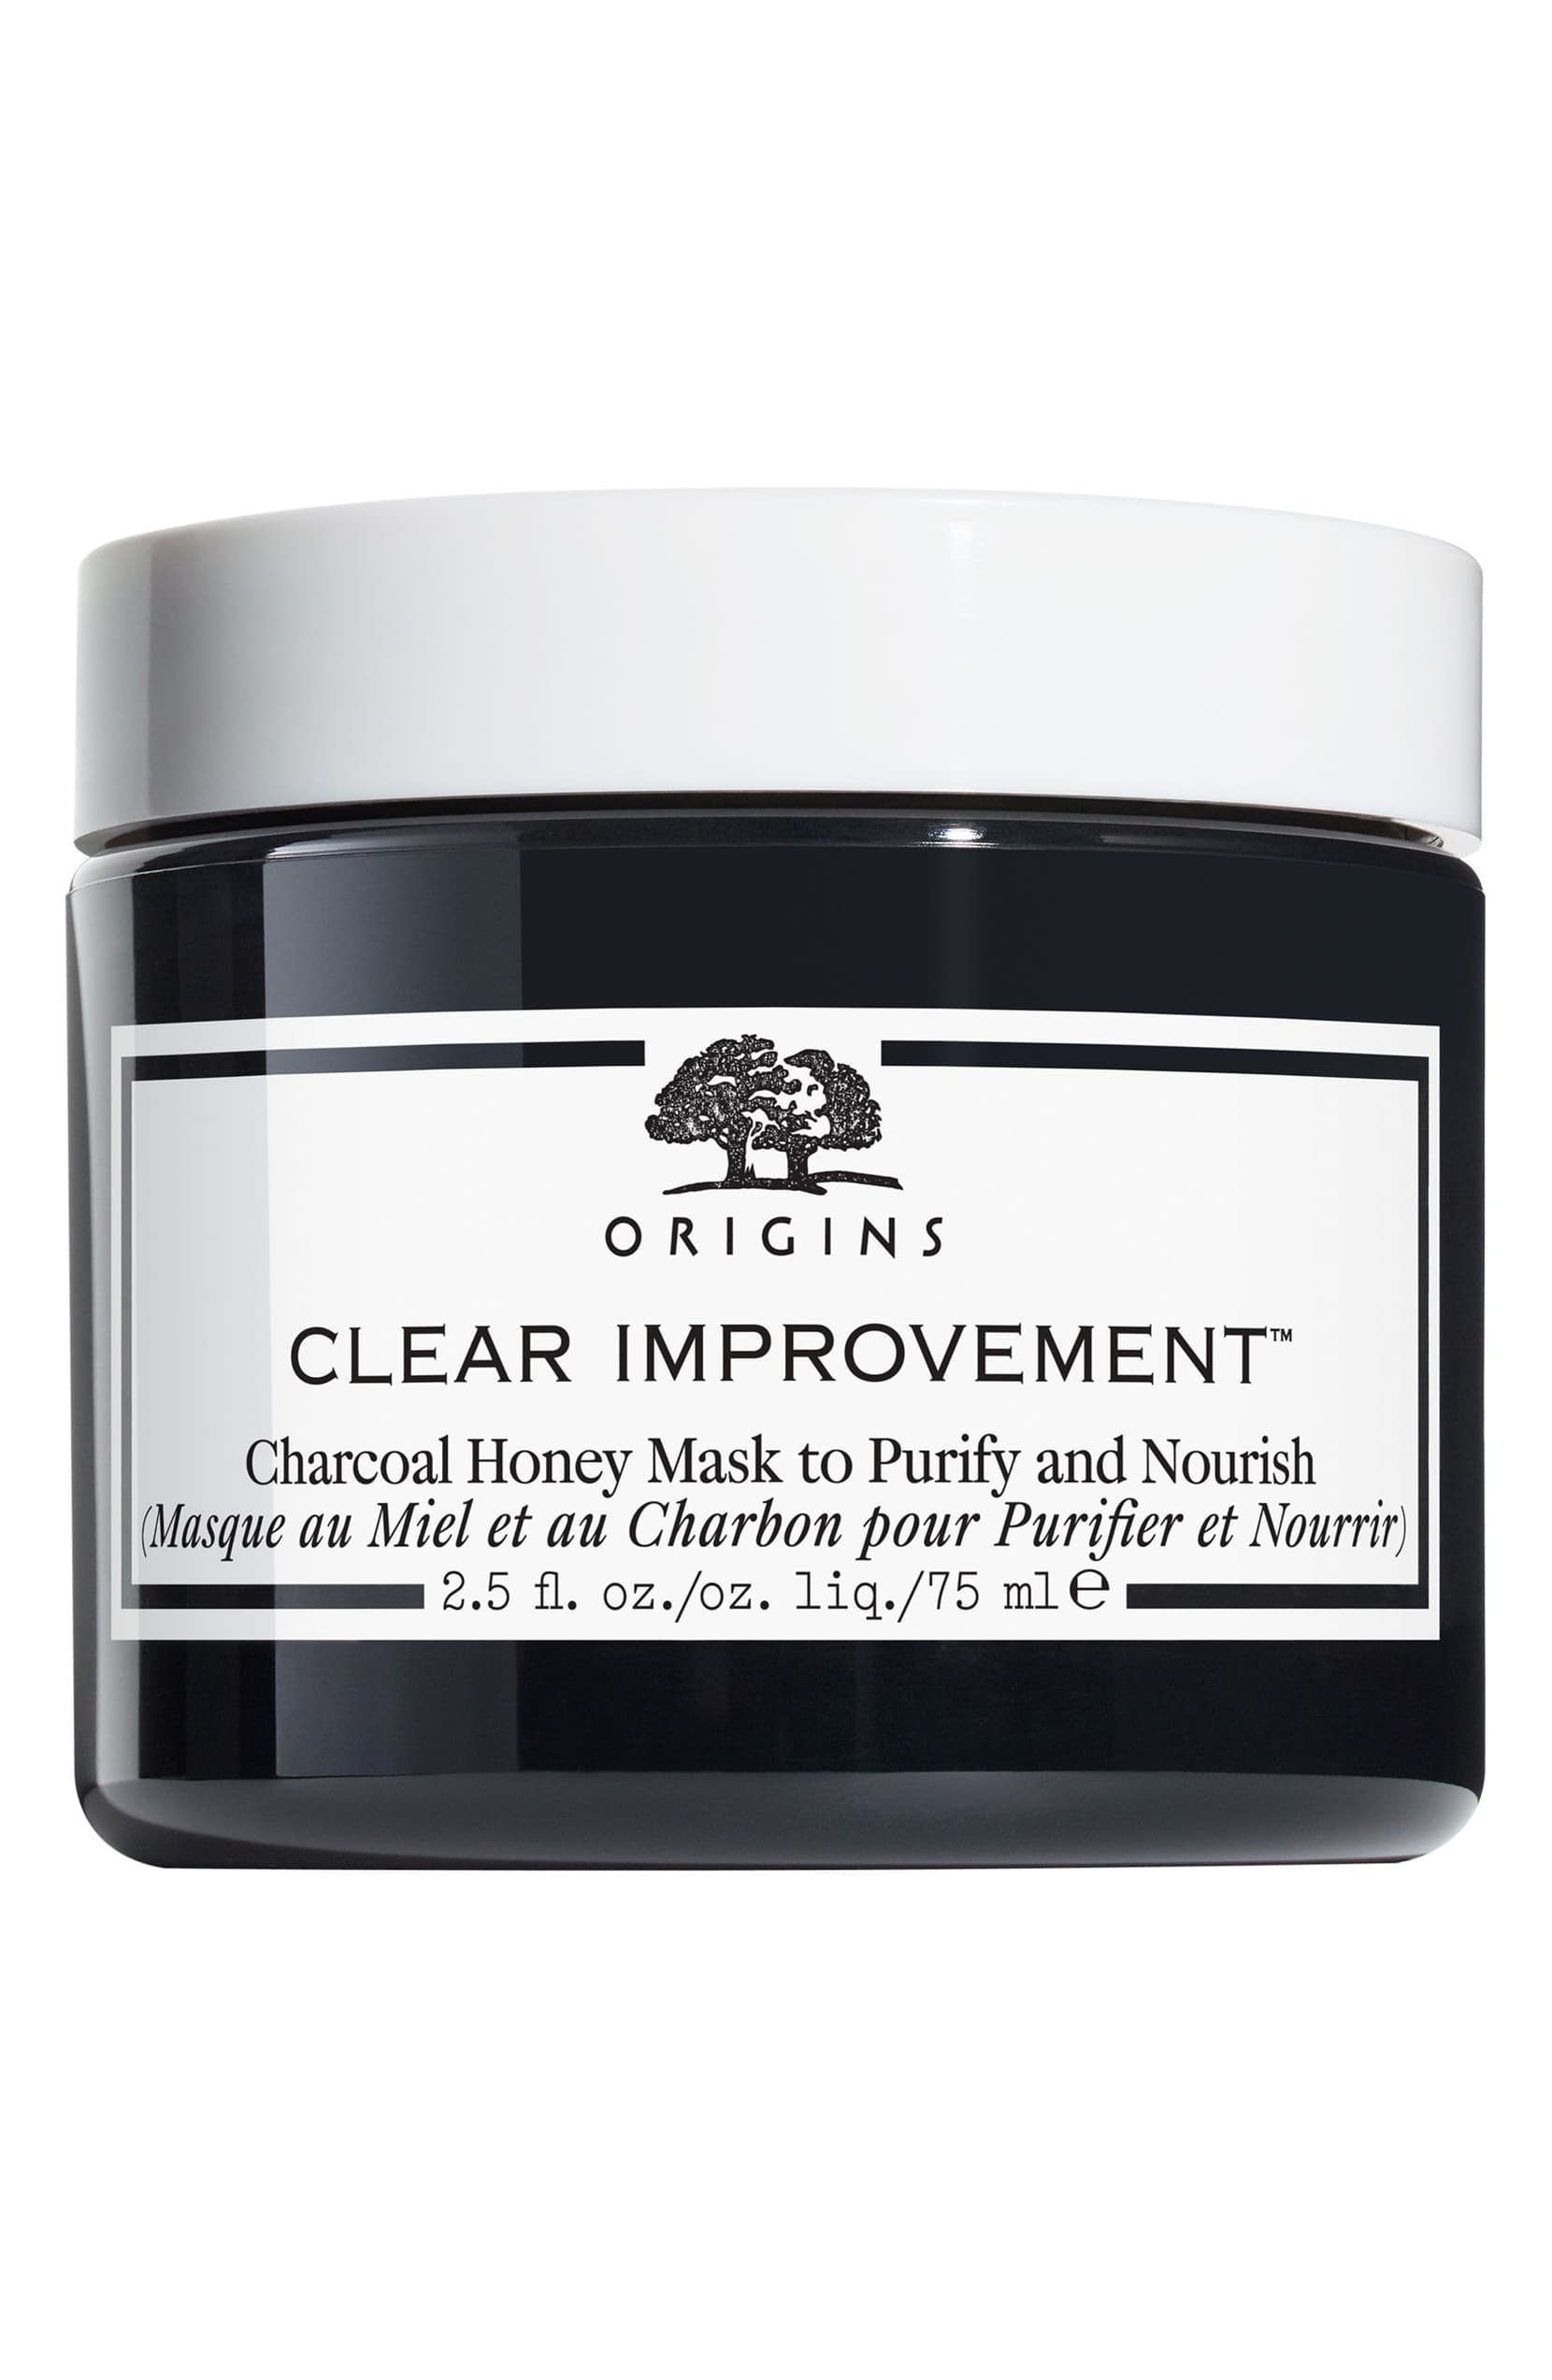 Origins Clear Improvement Charcoal Honey Mask to Purify & Nourish - eCosmeticWorld